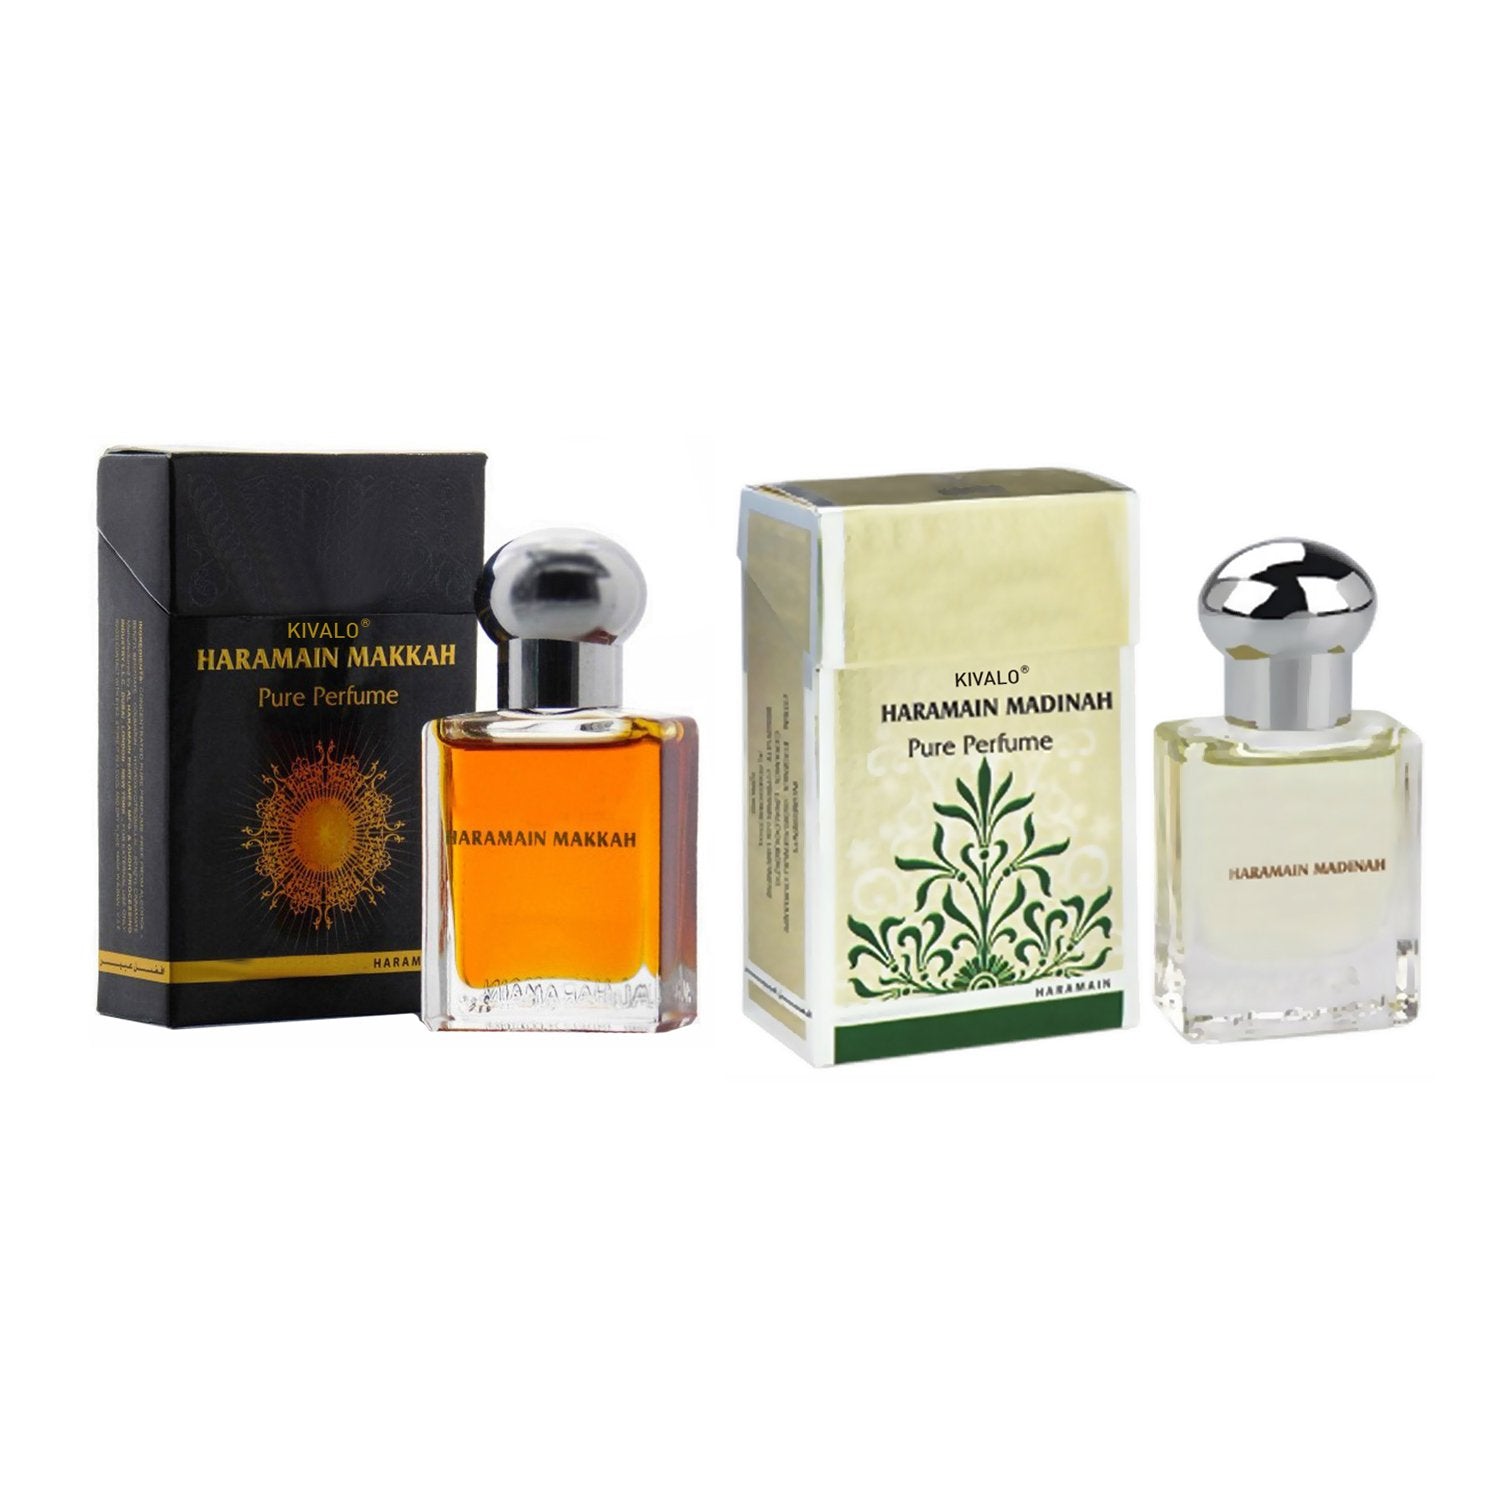 Al Haramain Makkah & Madinah Fragrance Pure Original Roll on Perfume Oil Pack of 2 (Attar) - 2 x 15 ml